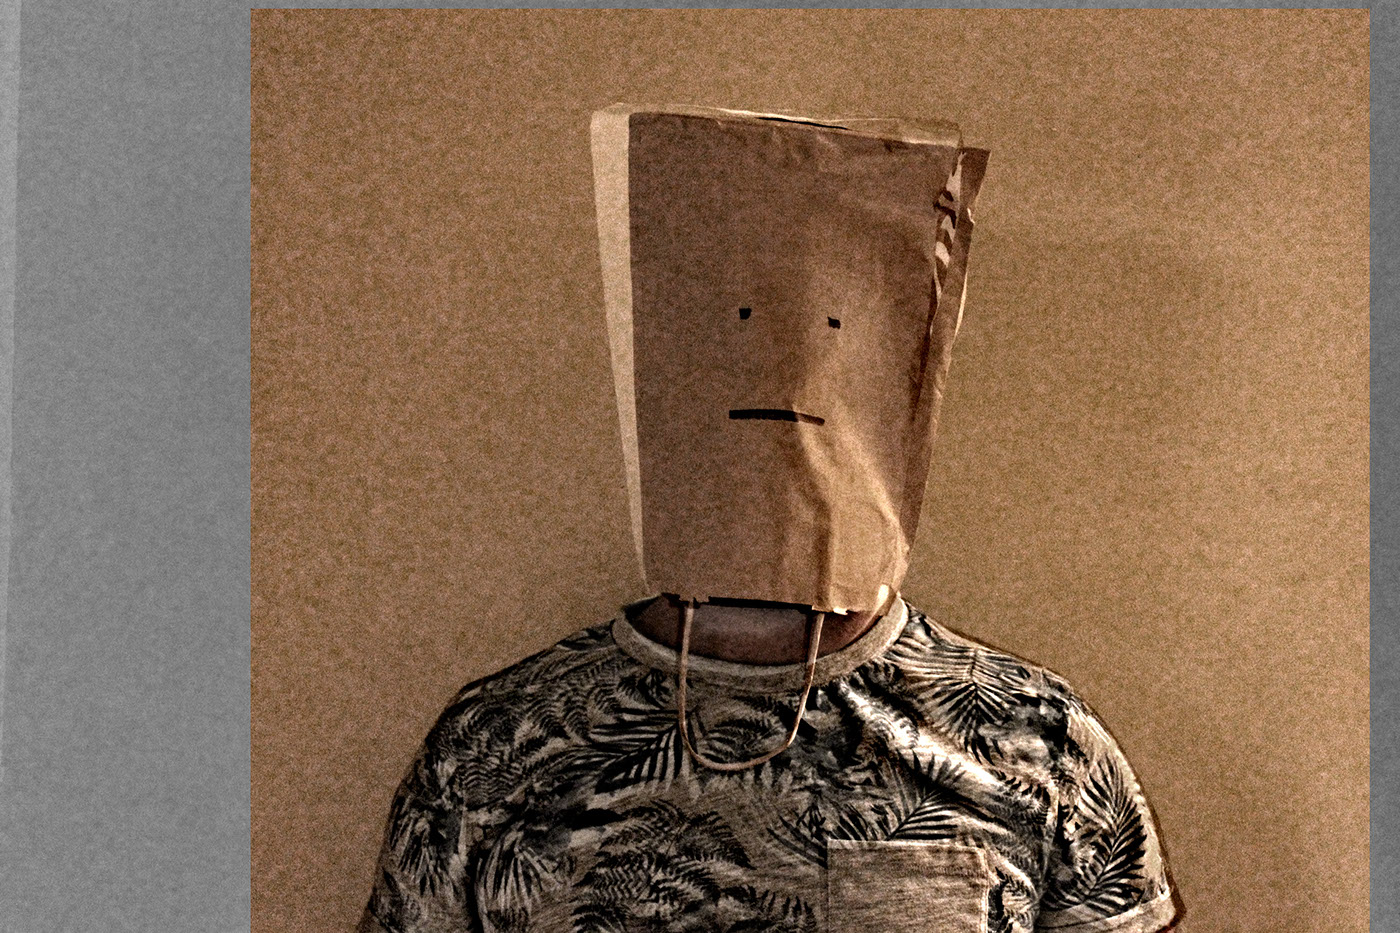 paper bag photomanipulation fury mask double exposure peer pressure rediscovery